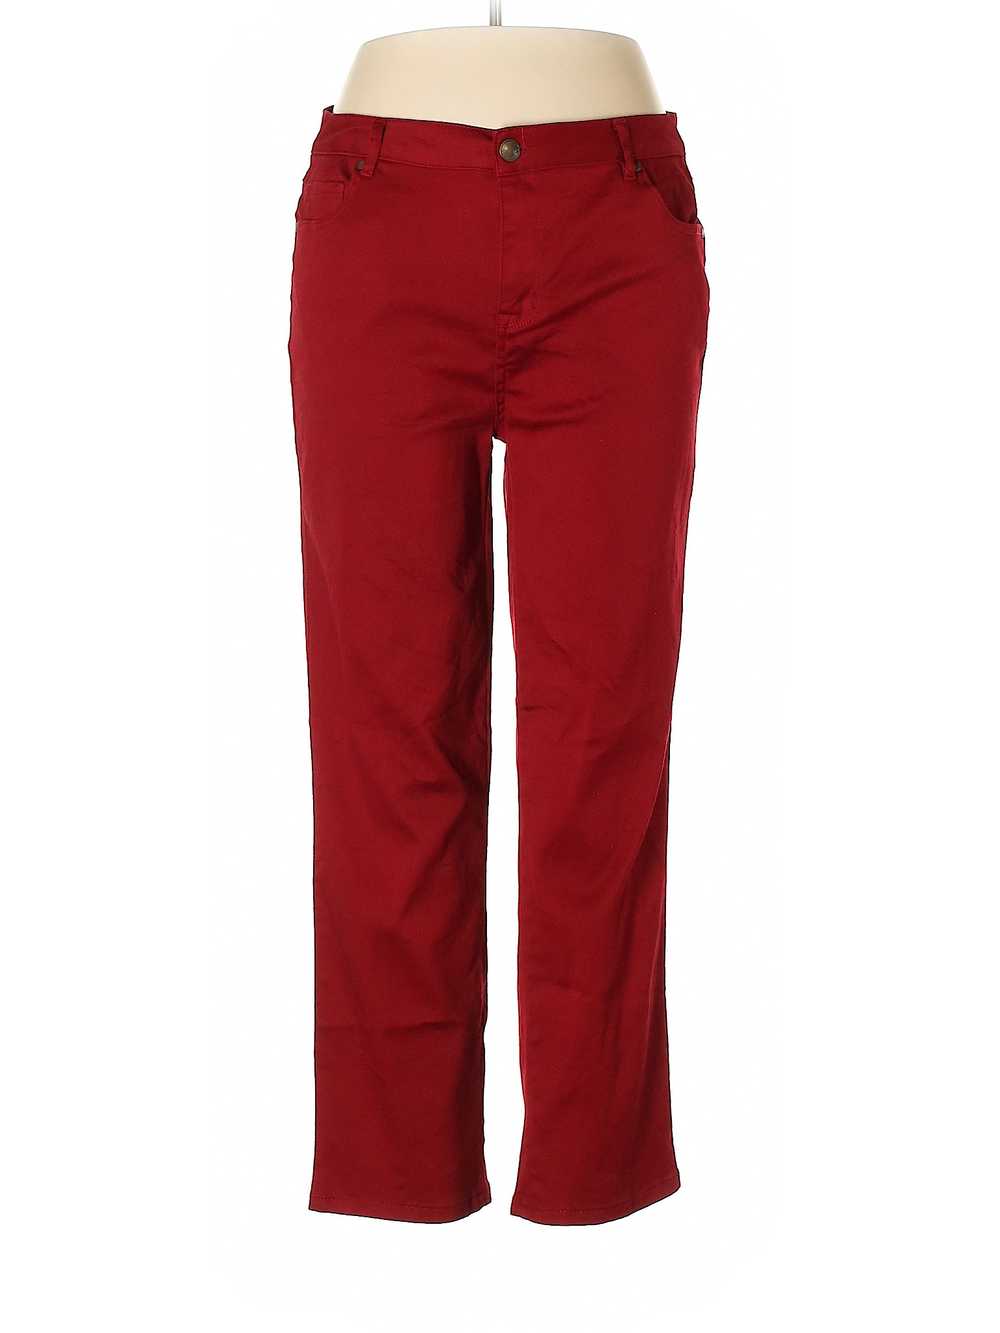 Avenue Women Red Jeans 18 Plus - image 1